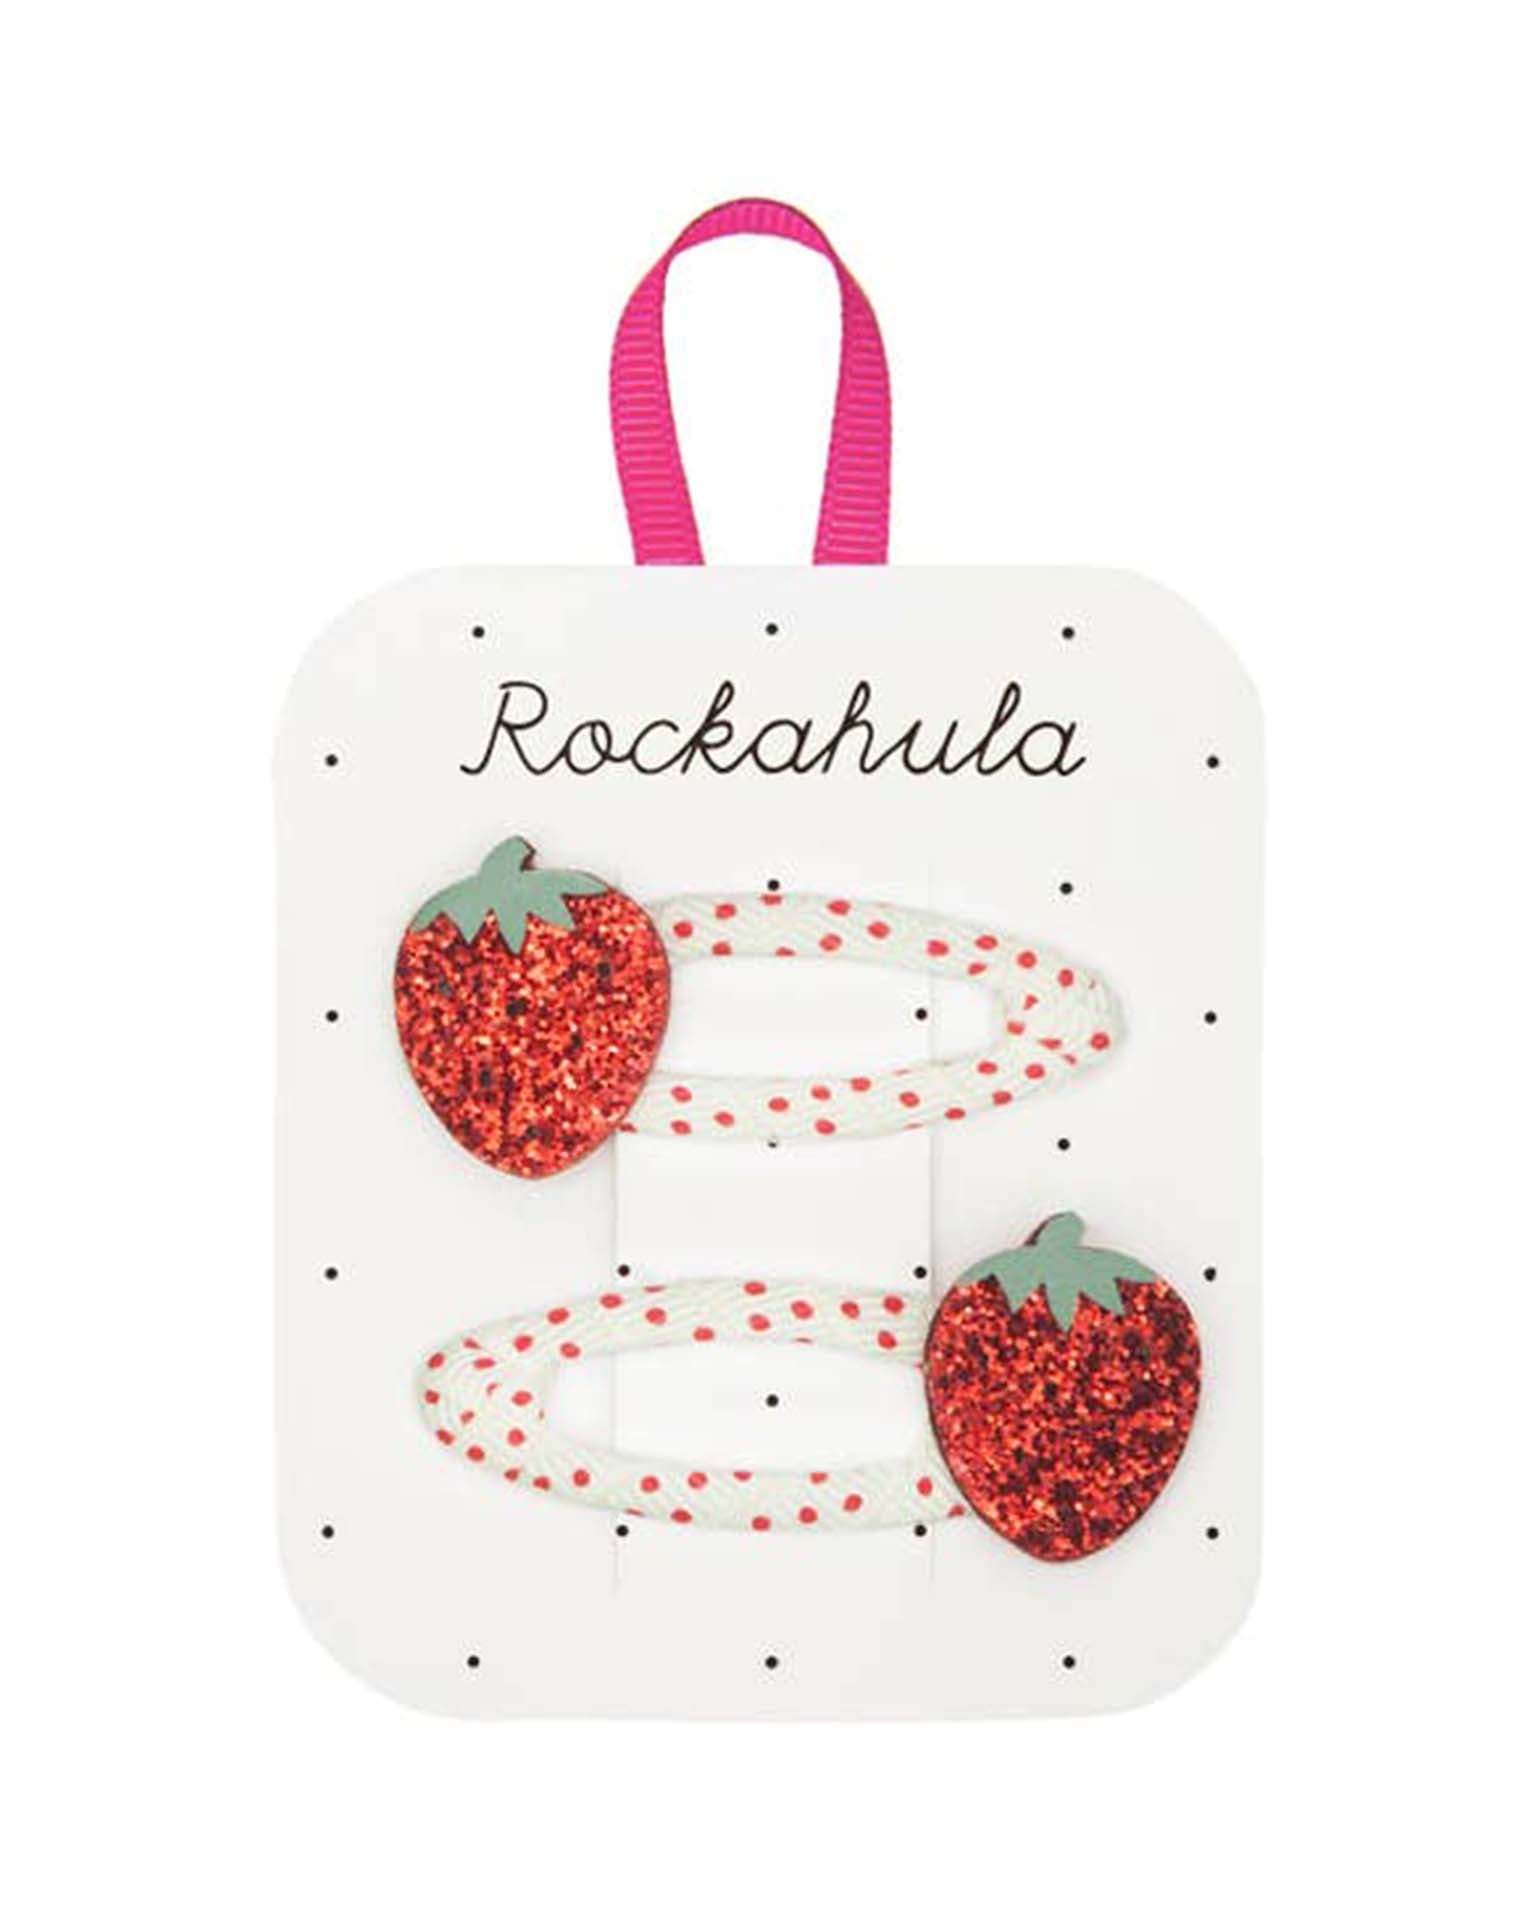 Little rockahula kids accessories strawberry fair clips